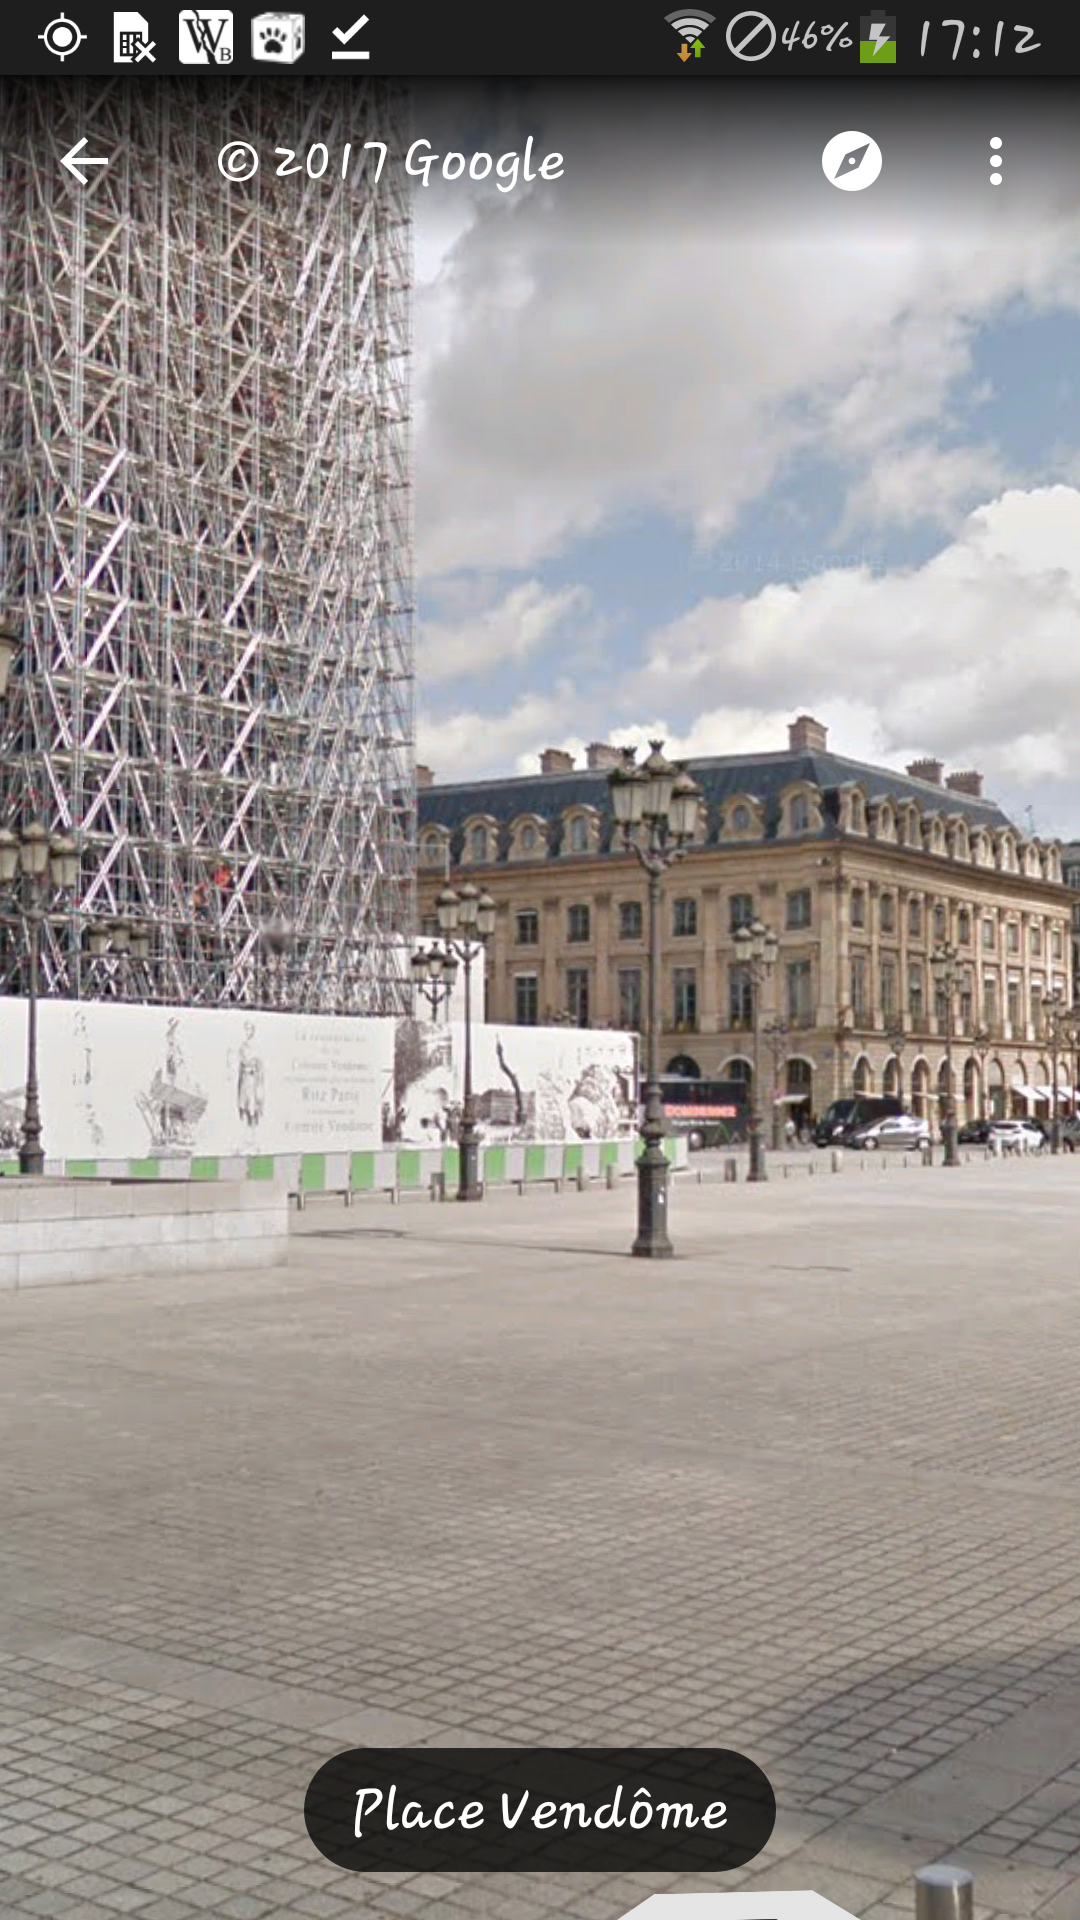 10, Place Vendome, Paris France is Bolvaints address...well this is it.